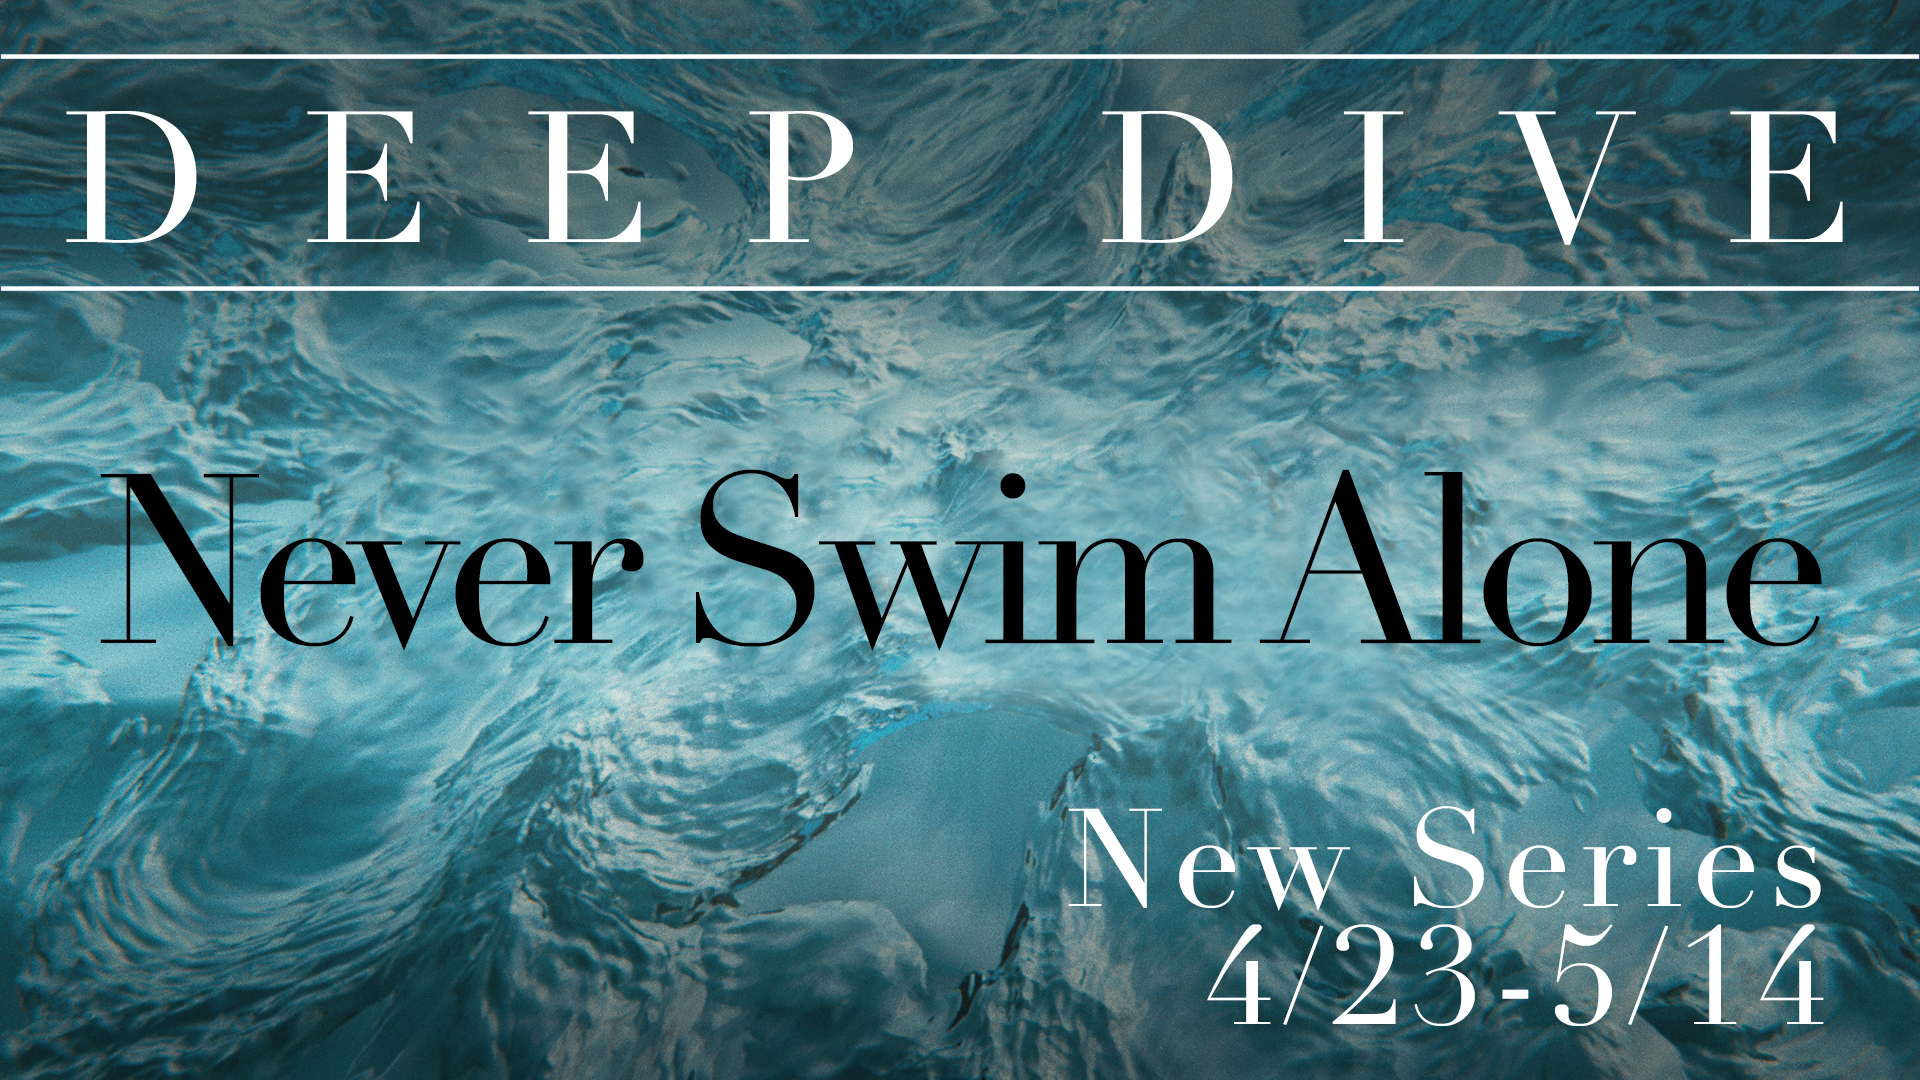 Deep Dive Part 1 "Never Swim Alone" (THRIVE)